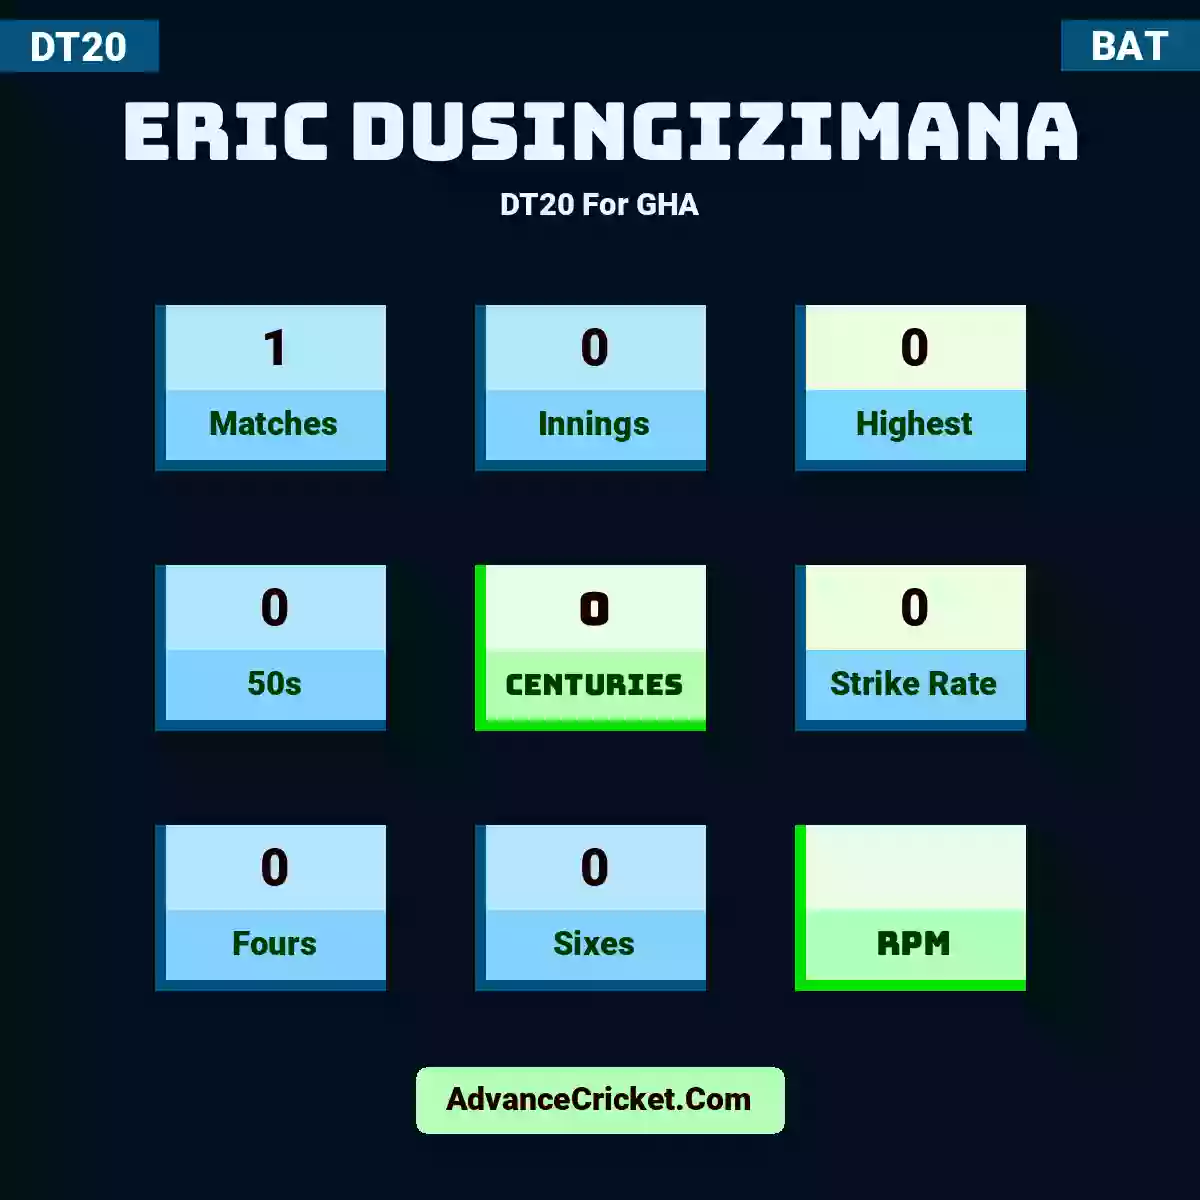 Eric Dusingizimana DT20  For GHA, Eric Dusingizimana played 1 matches, scored 0 runs as highest, 0 half-centuries, and 0 centuries, with a strike rate of 0. E.Dusingizimana hit 0 fours and 0 sixes.